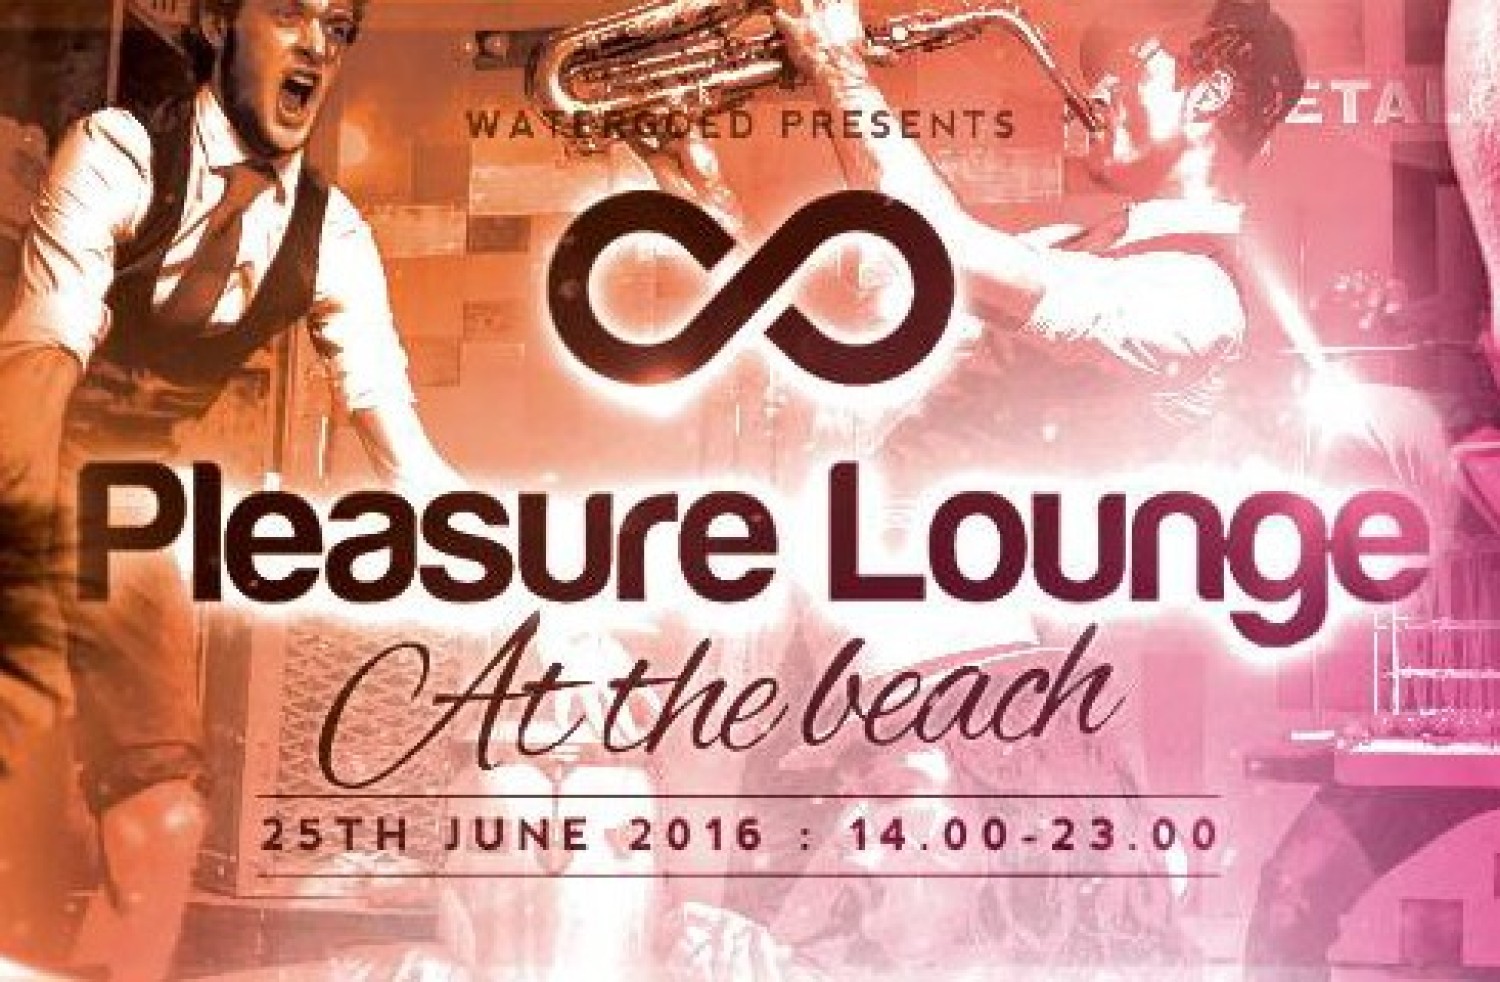 Party report: Pleasure Lounge Outdoor, Lathum (21-05-2016)